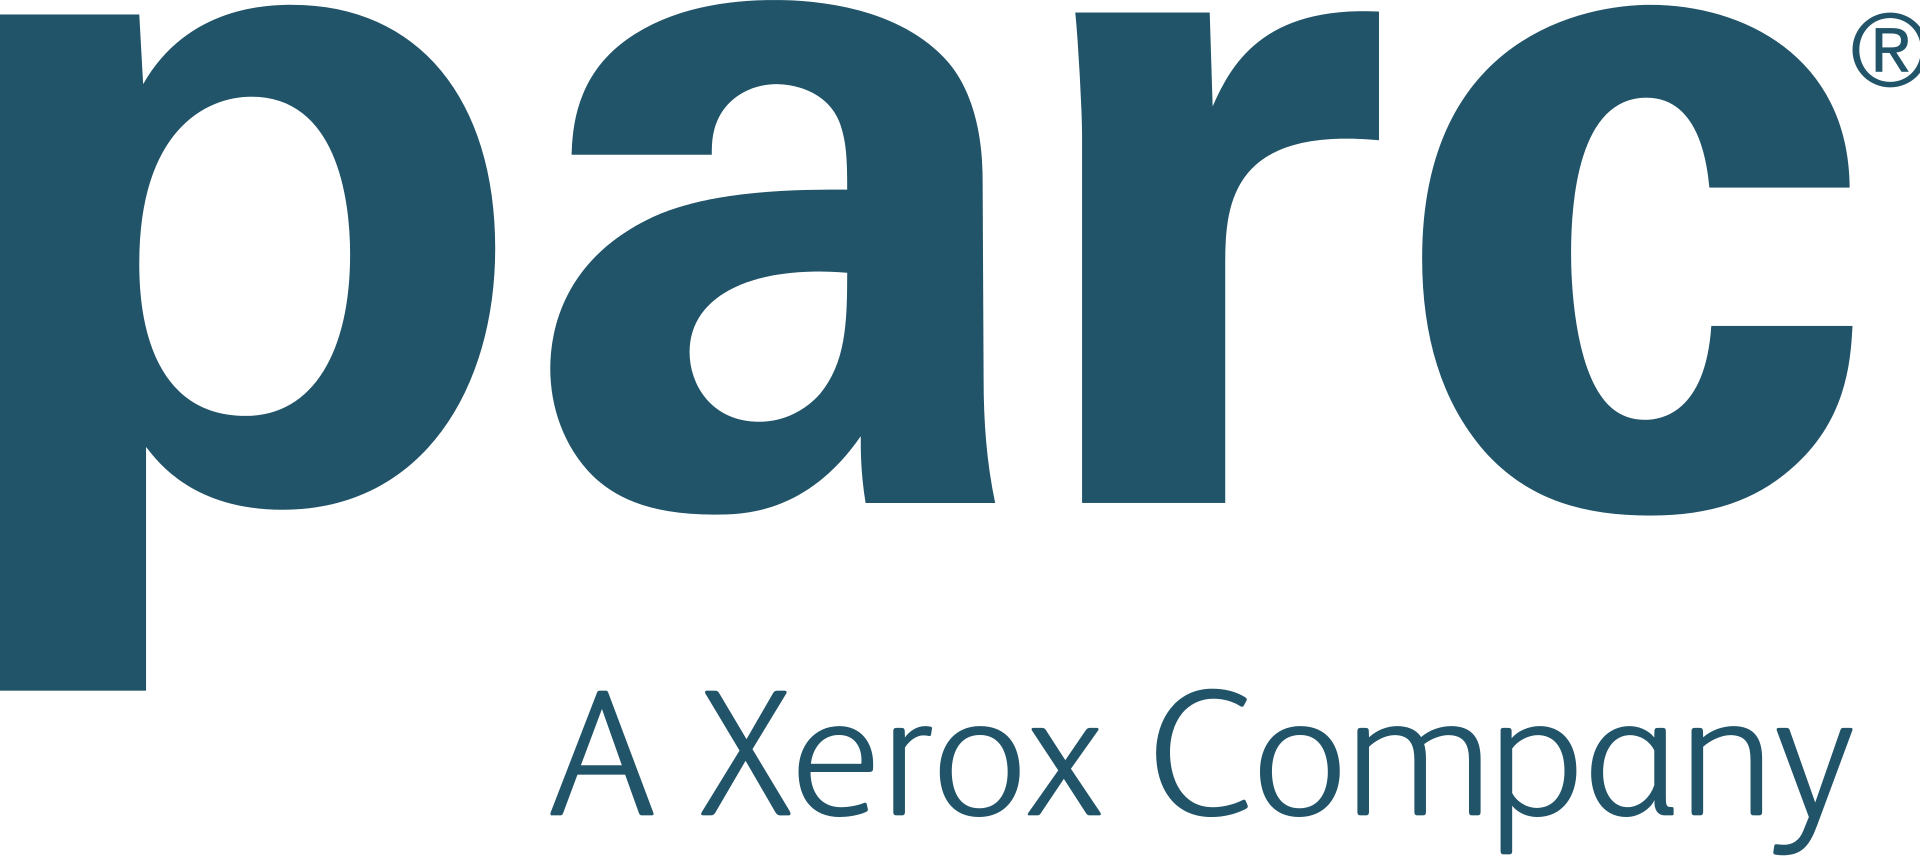 Xerox PARC - Xerox Palo Alto Research Center - Xerox Research Center Webster